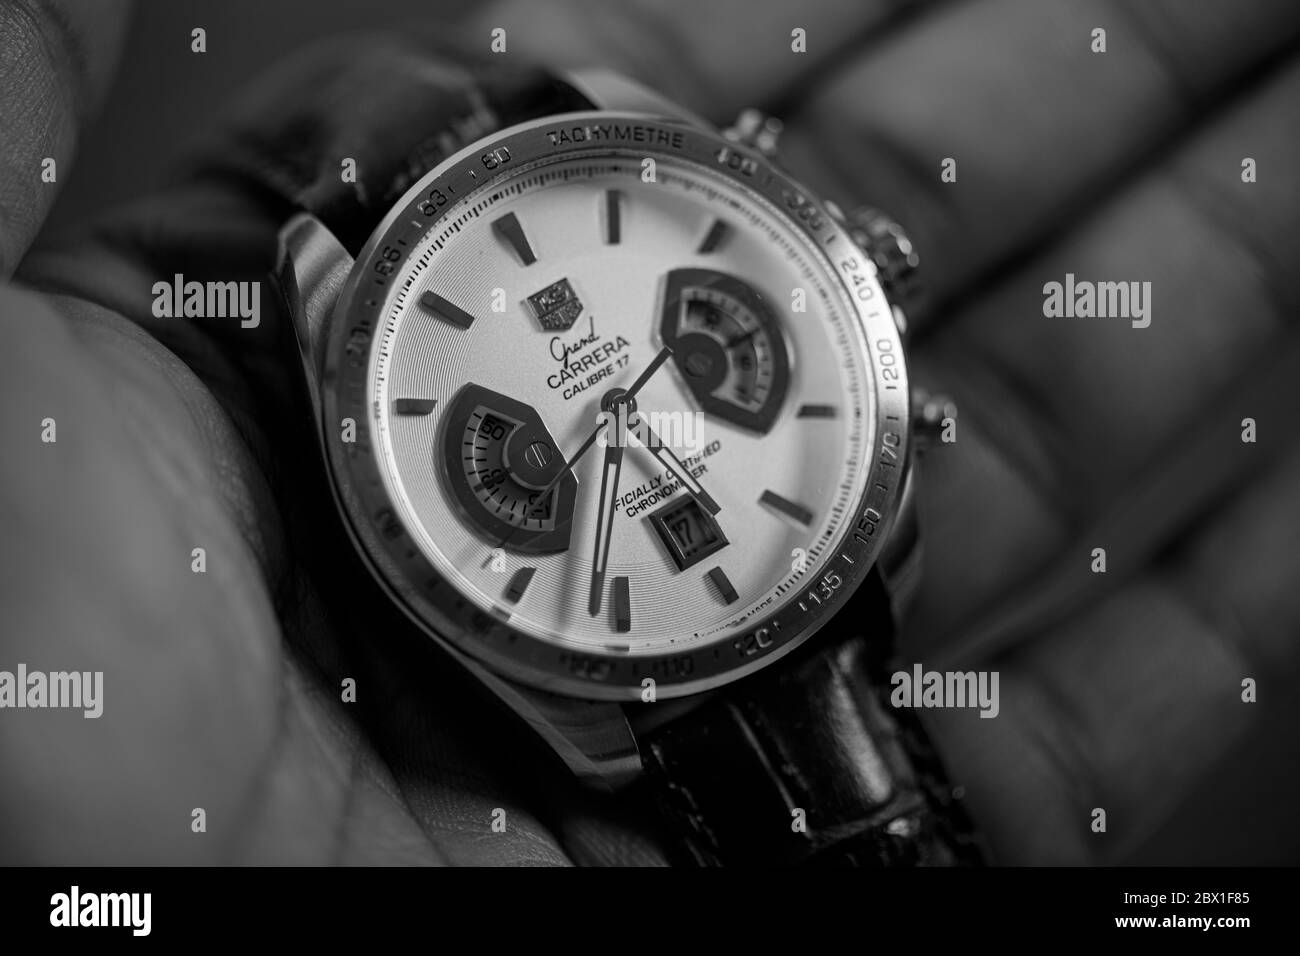 Tag Heuer Grand Carrera Calibre 17 RS Chronograph Men's Wrist Watch Stock  Photo - Alamy